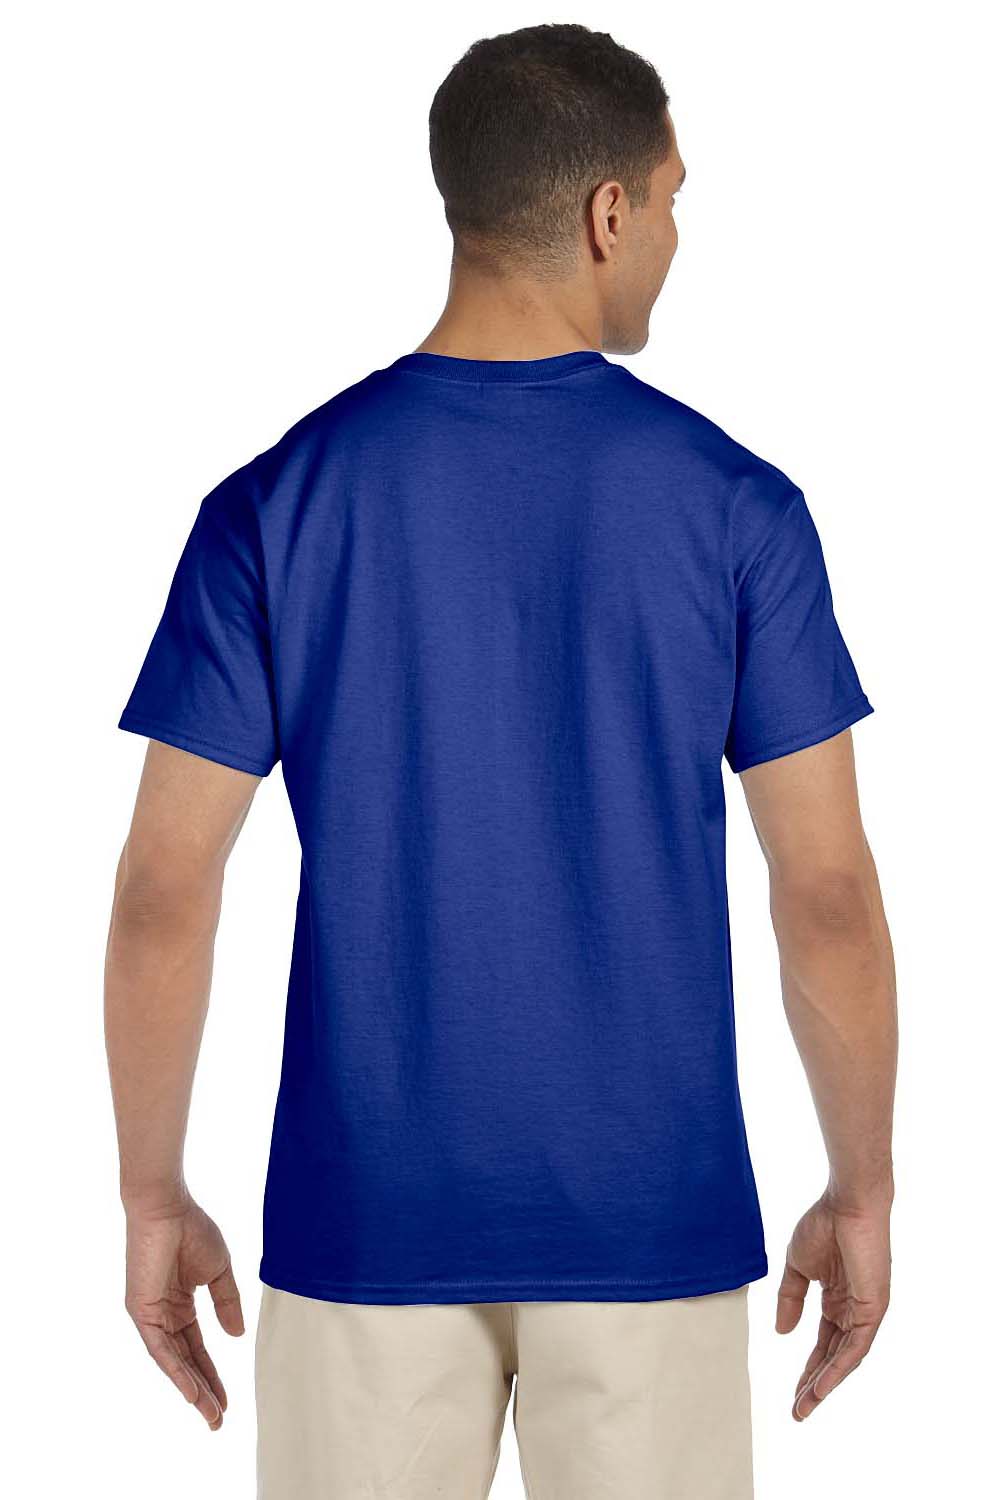 Gildan G230 Mens Ultra Short Sleeve Crewneck T-Shirt w/ Pocket Royal Blue Back